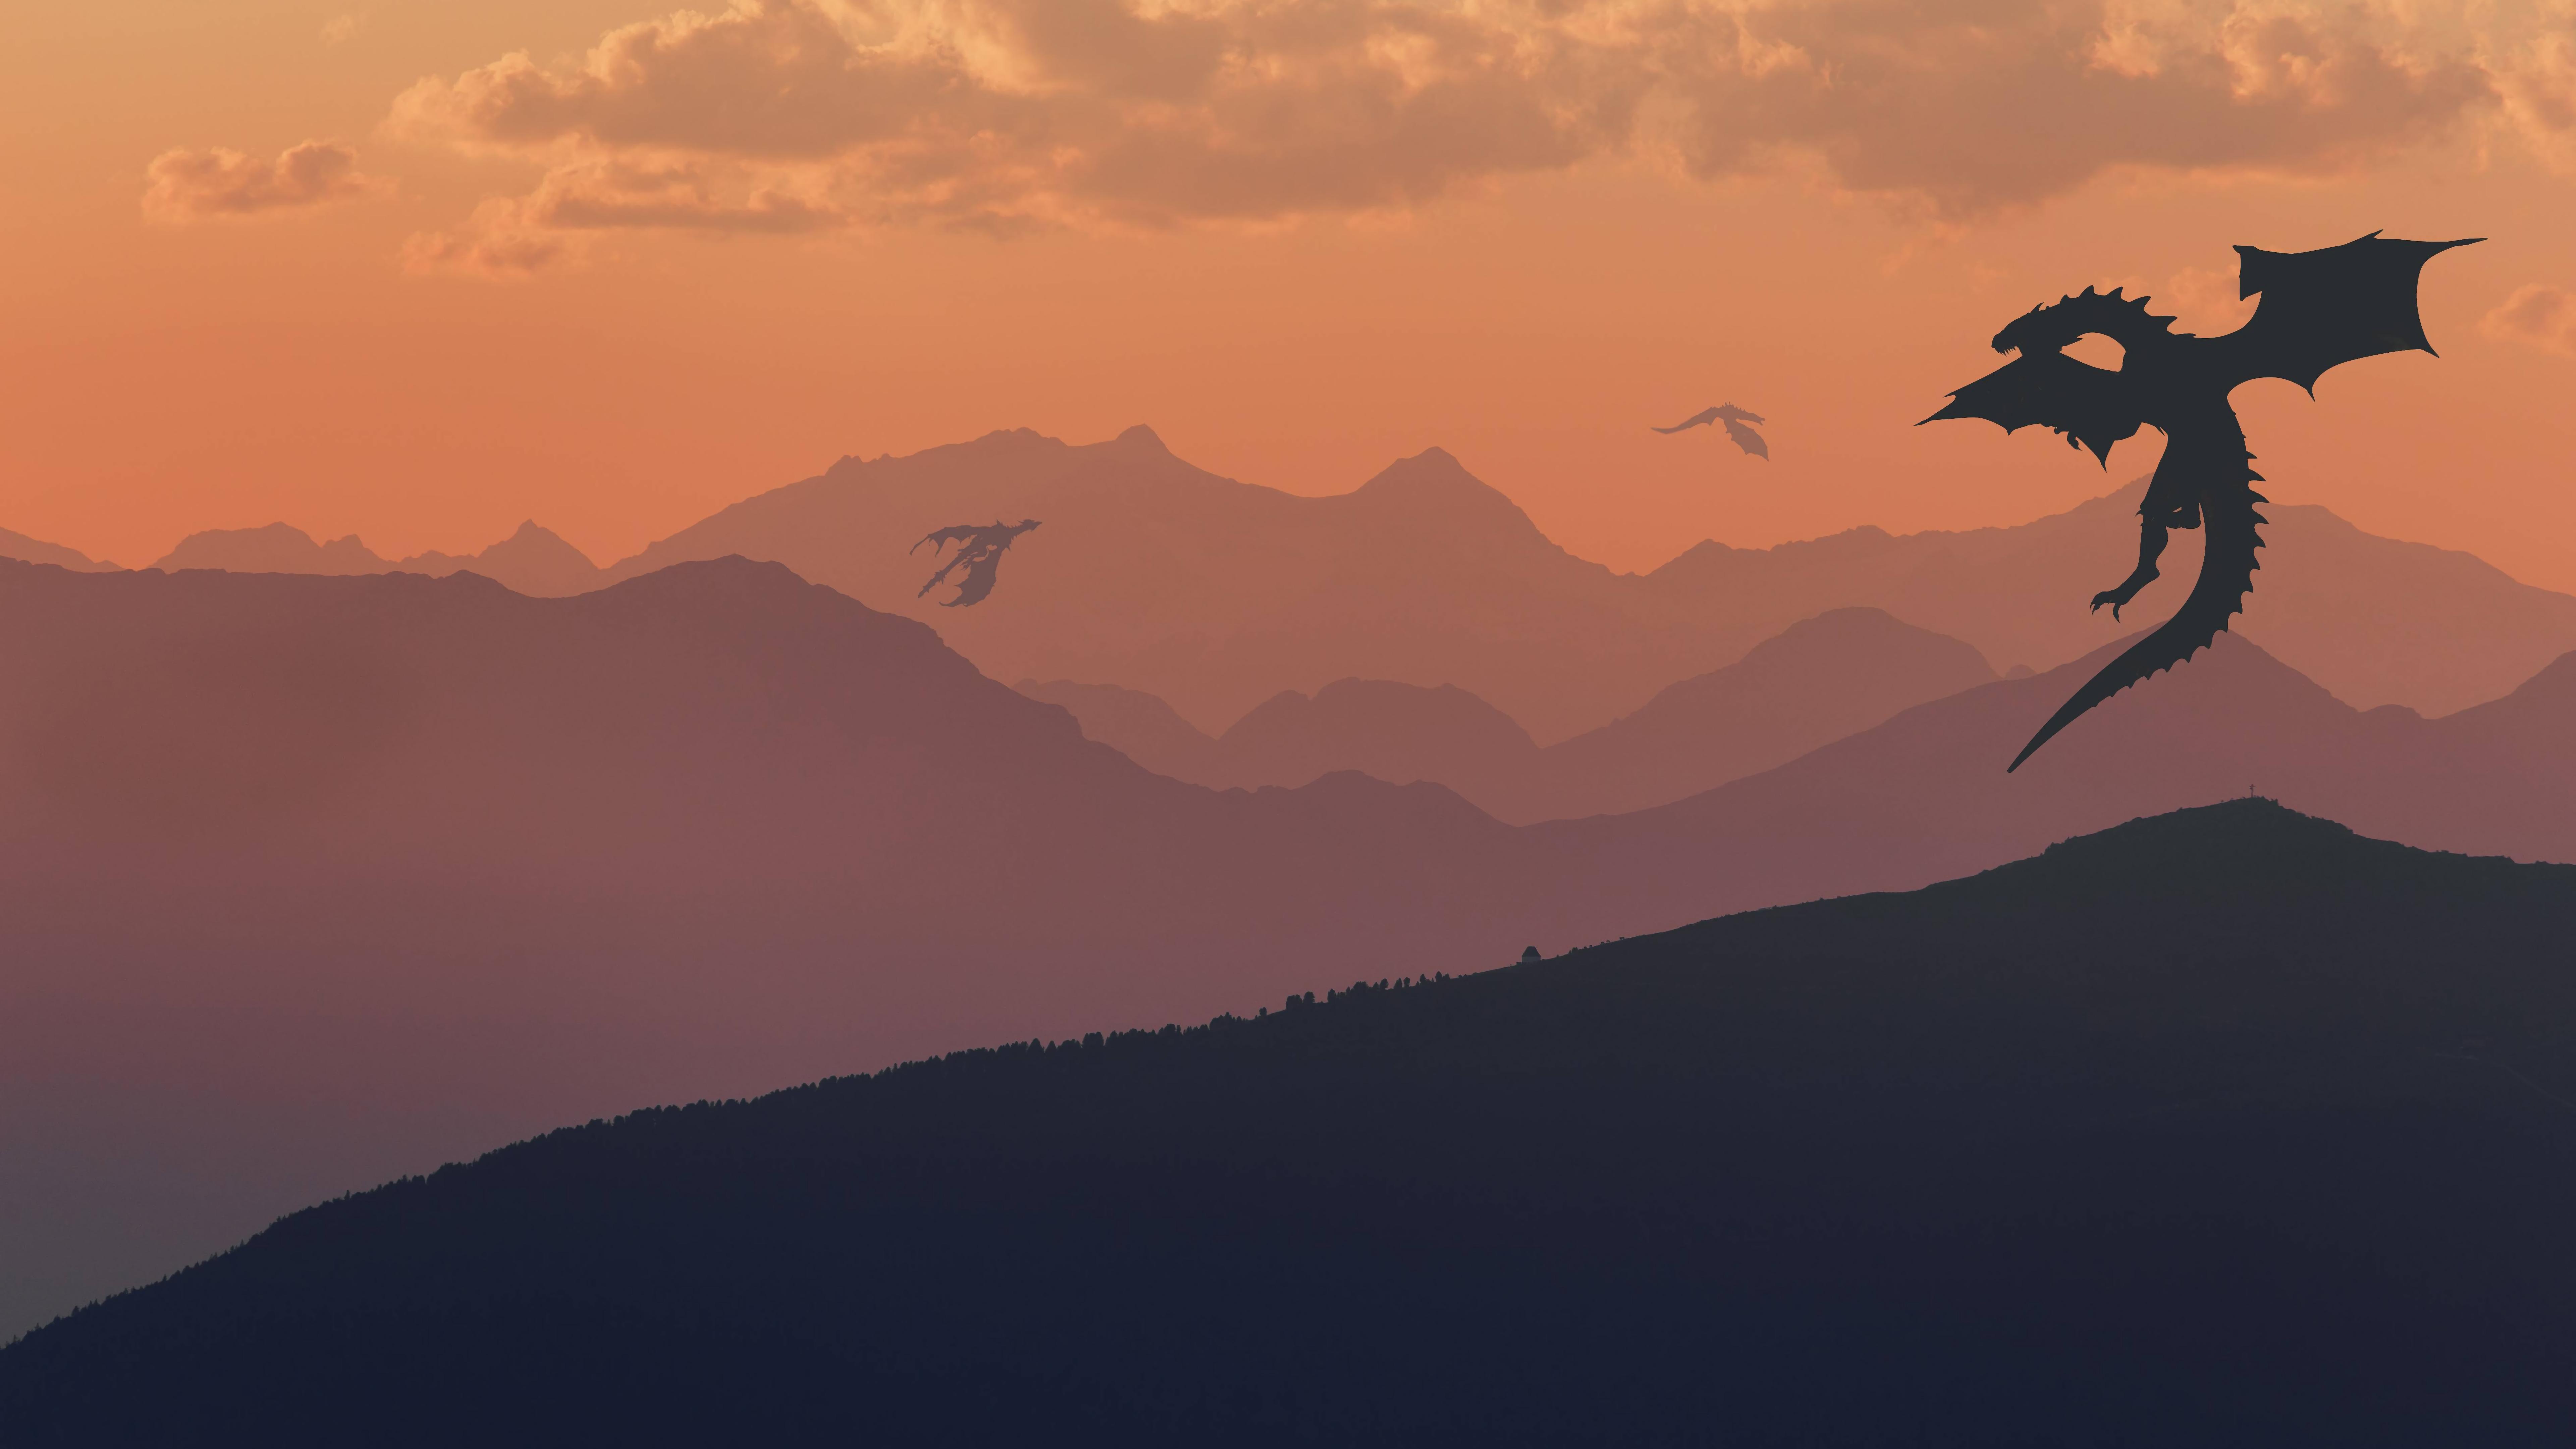 Dragons Fantasy Mountains Landscape Minimalist Digital Art 8k